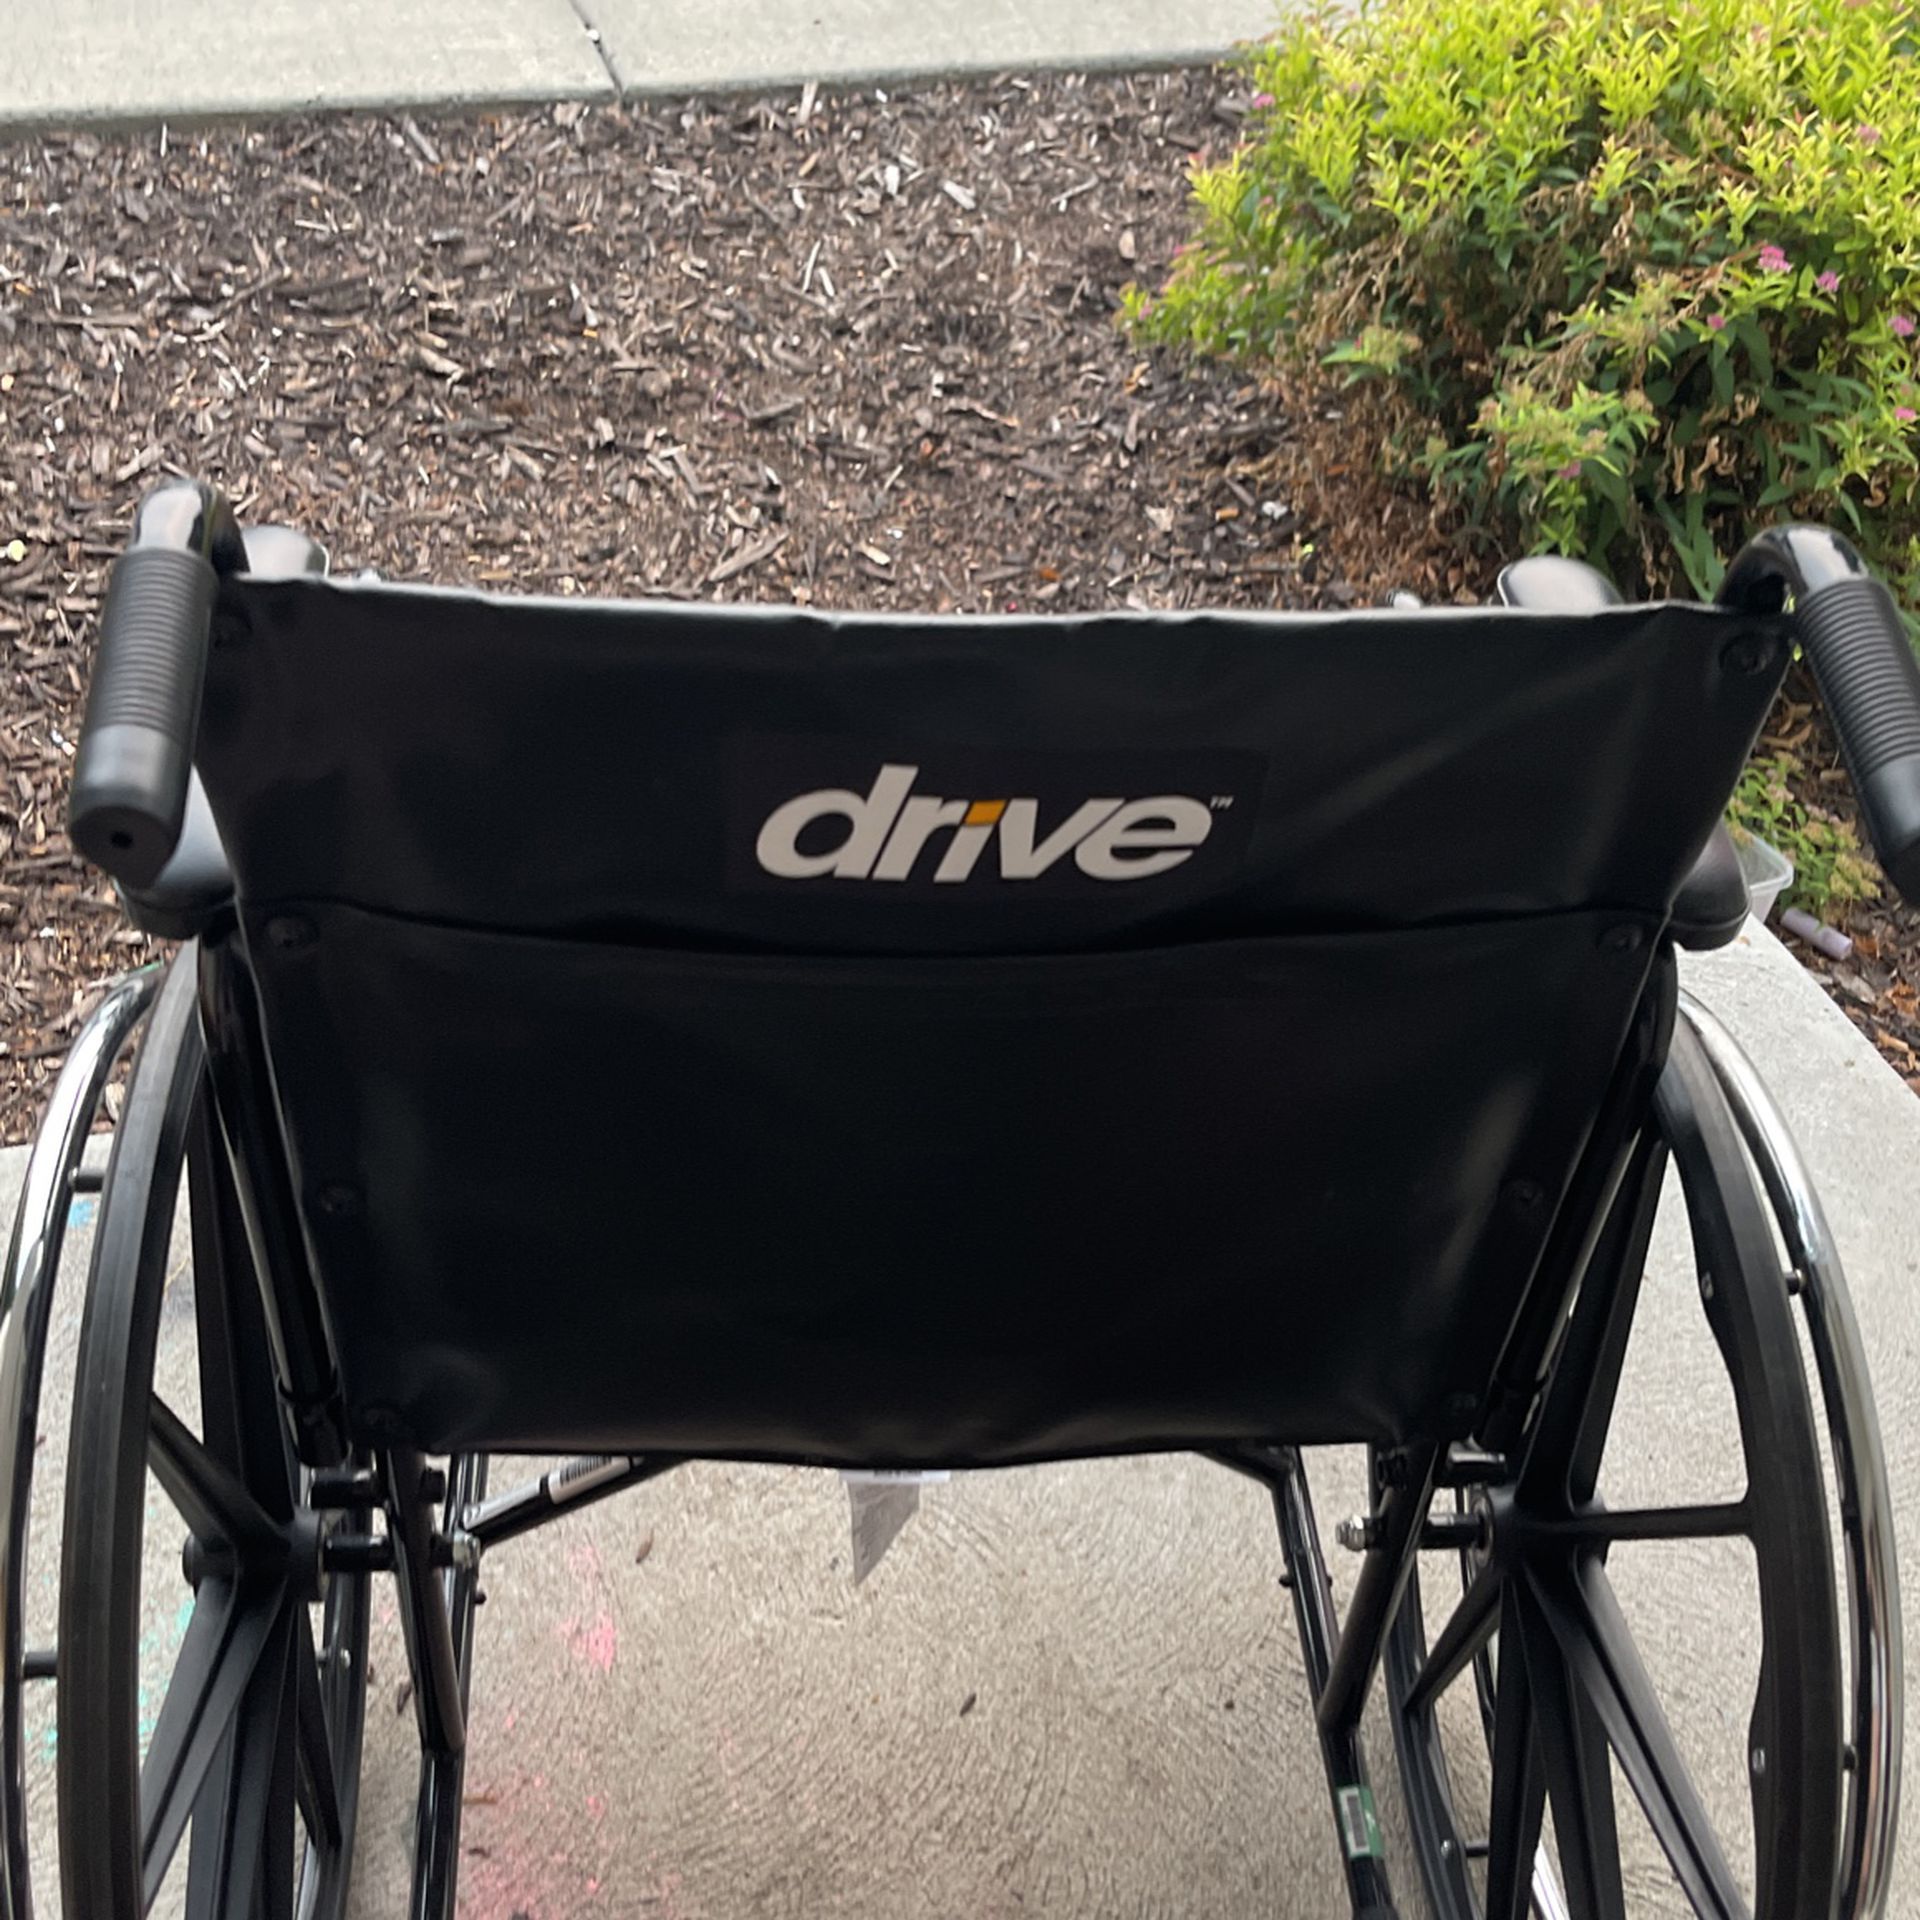 Drive Wheelchair Never Used! Like New!